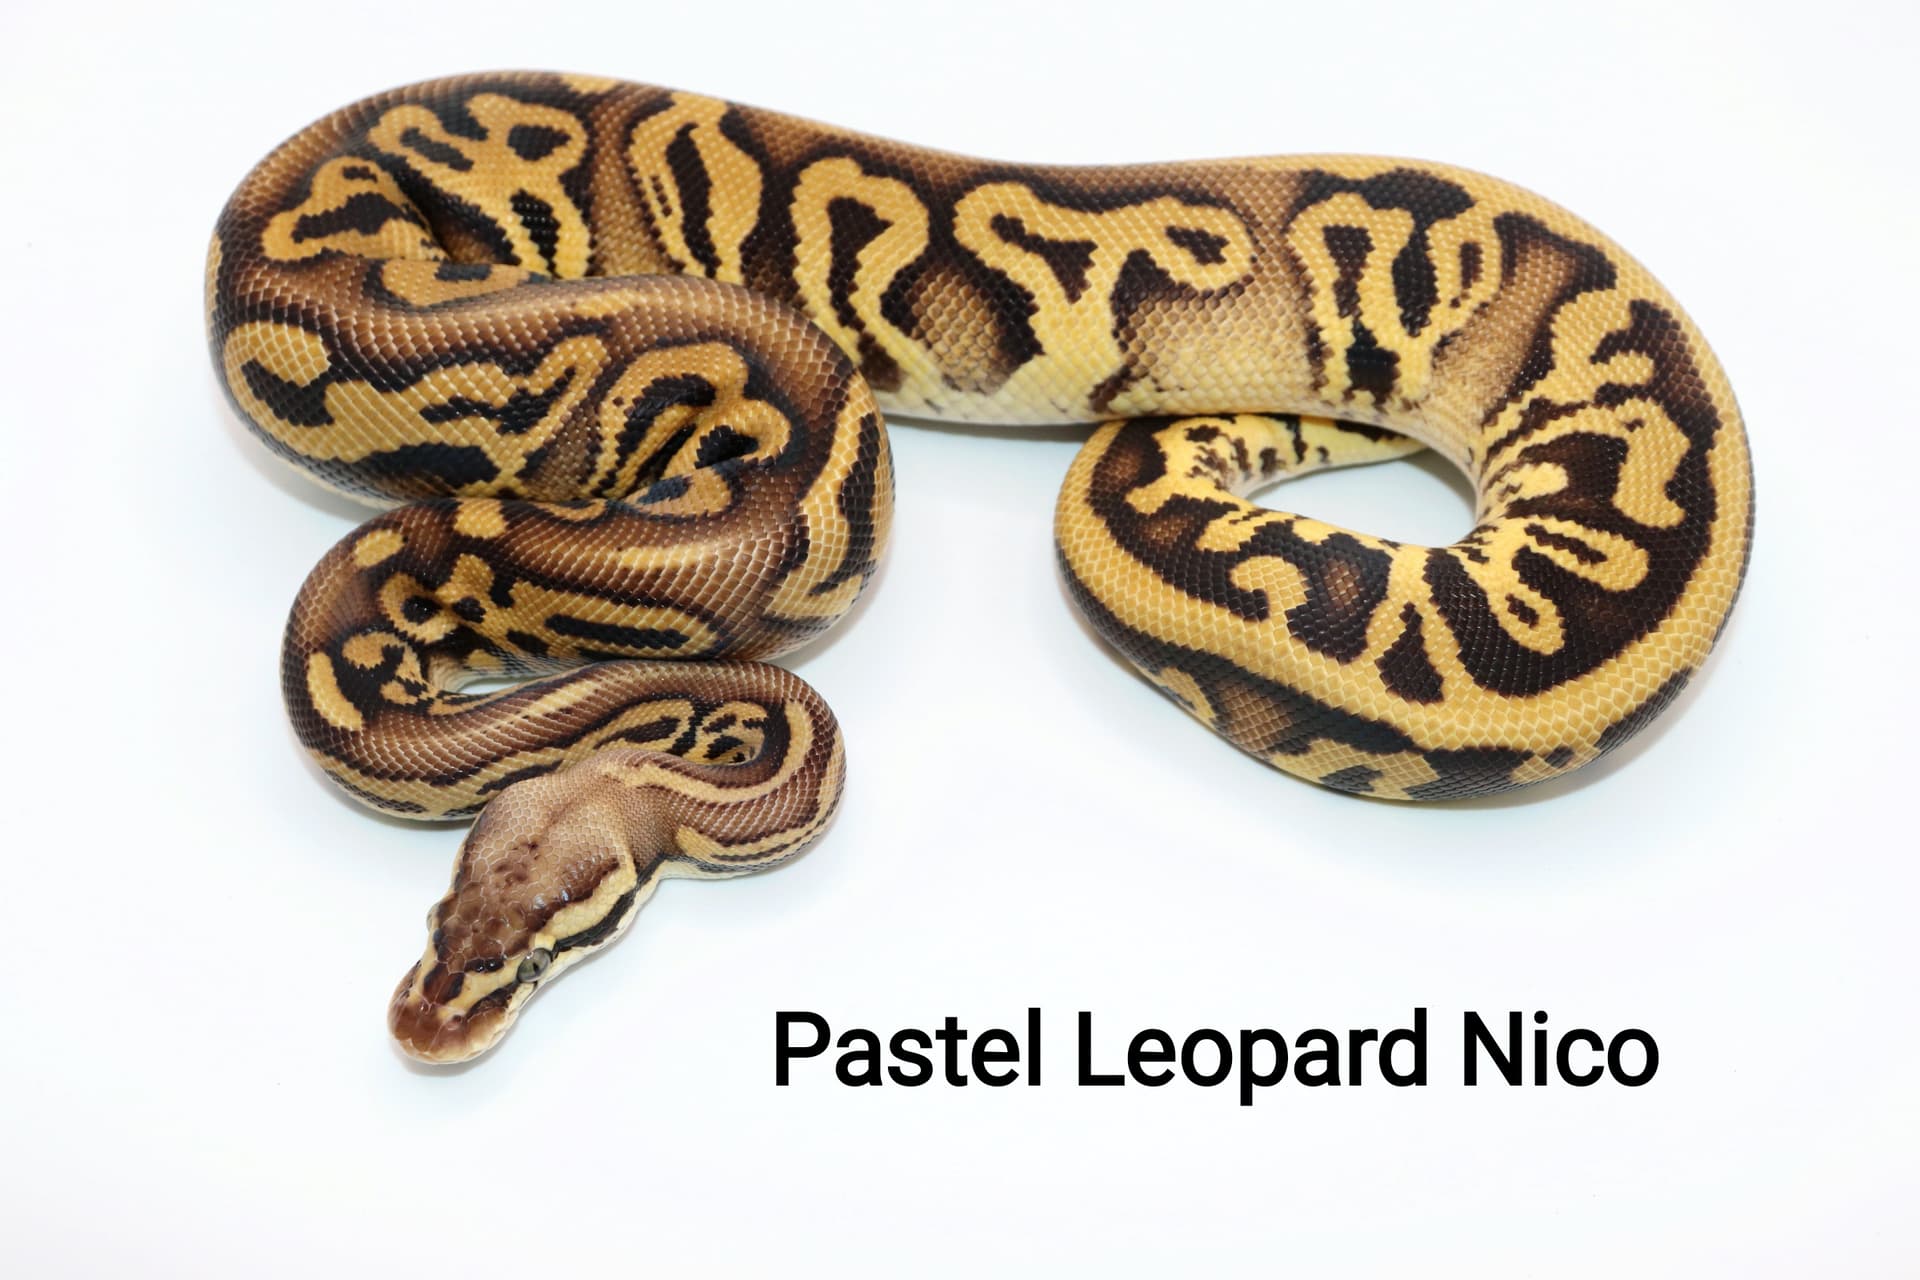 Pastel Leopard Nico by DNJ Pythons